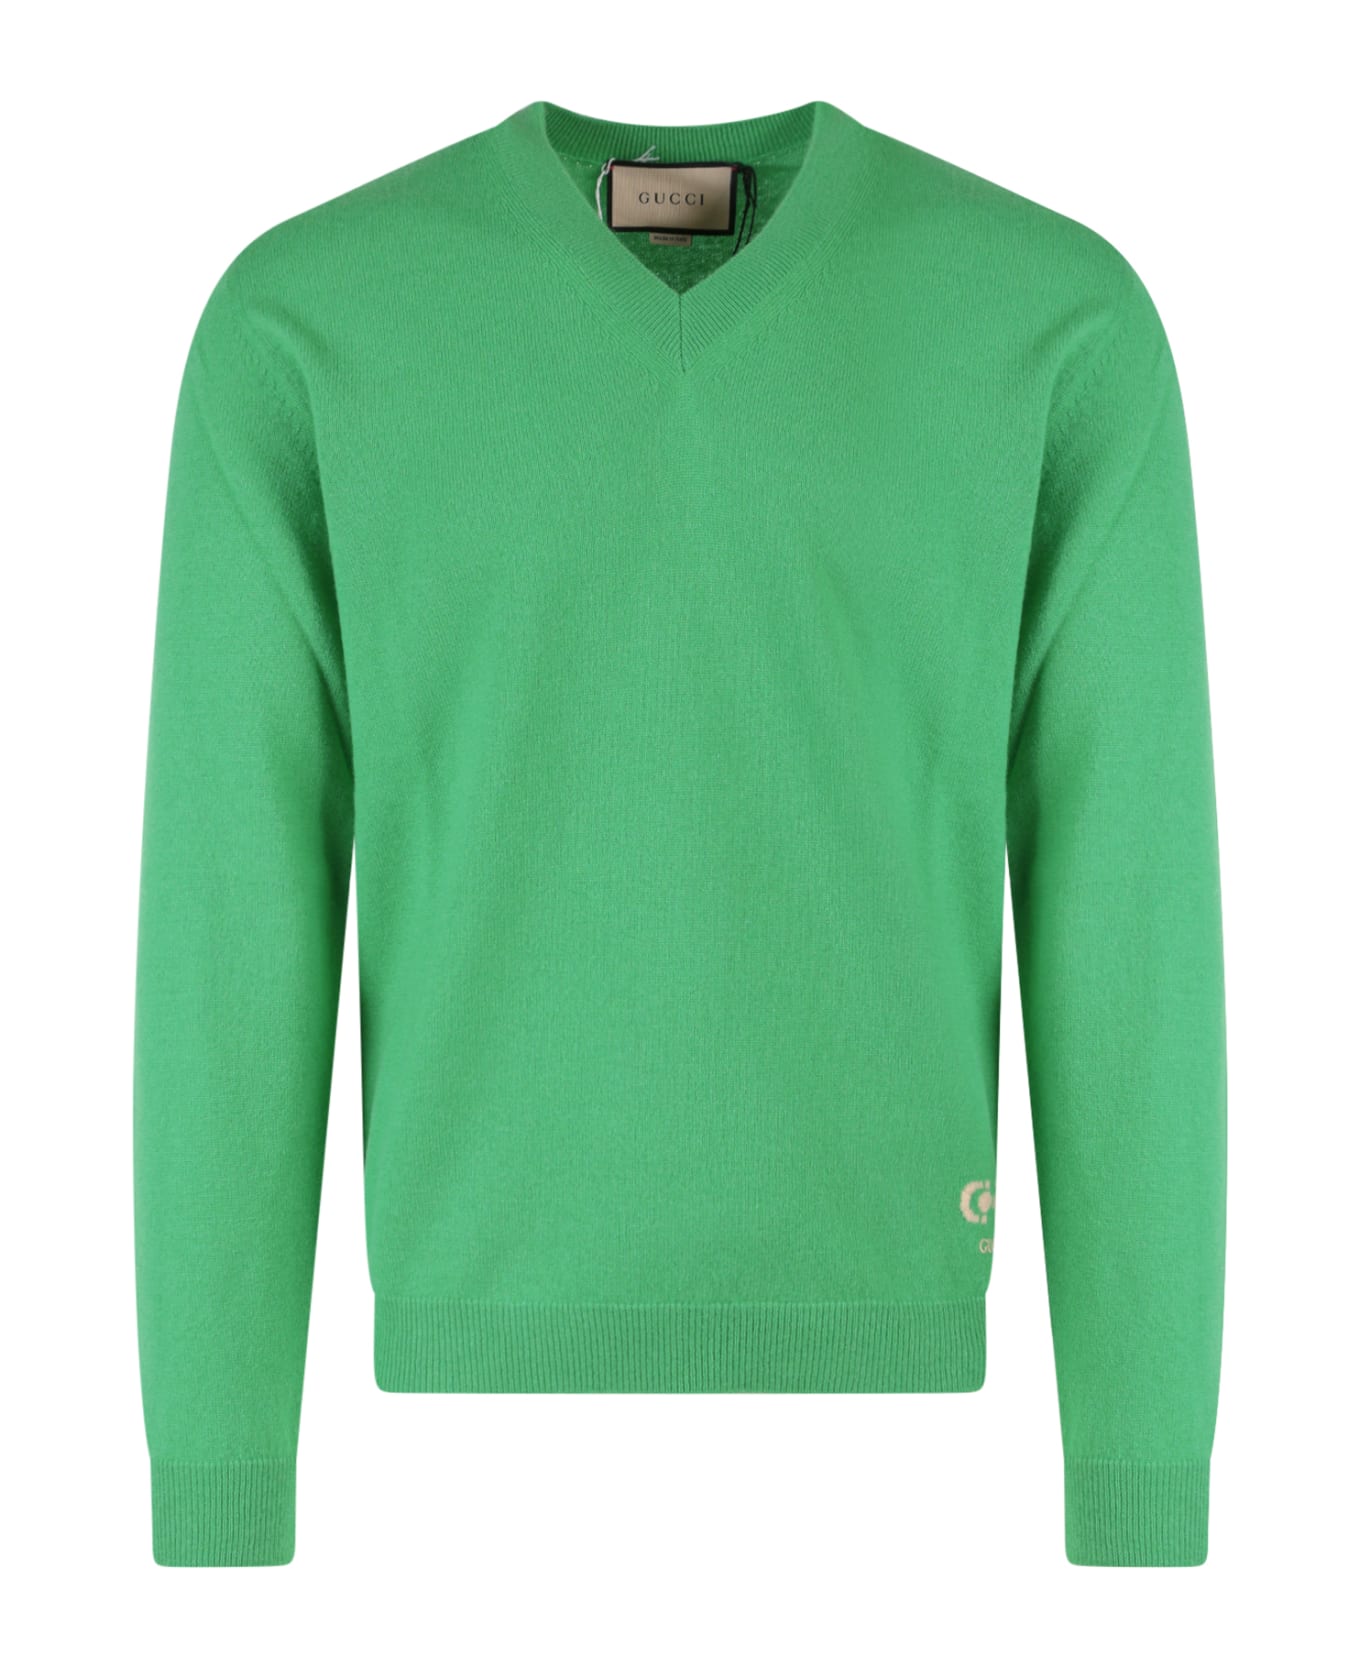 Gucci Sweater - Green